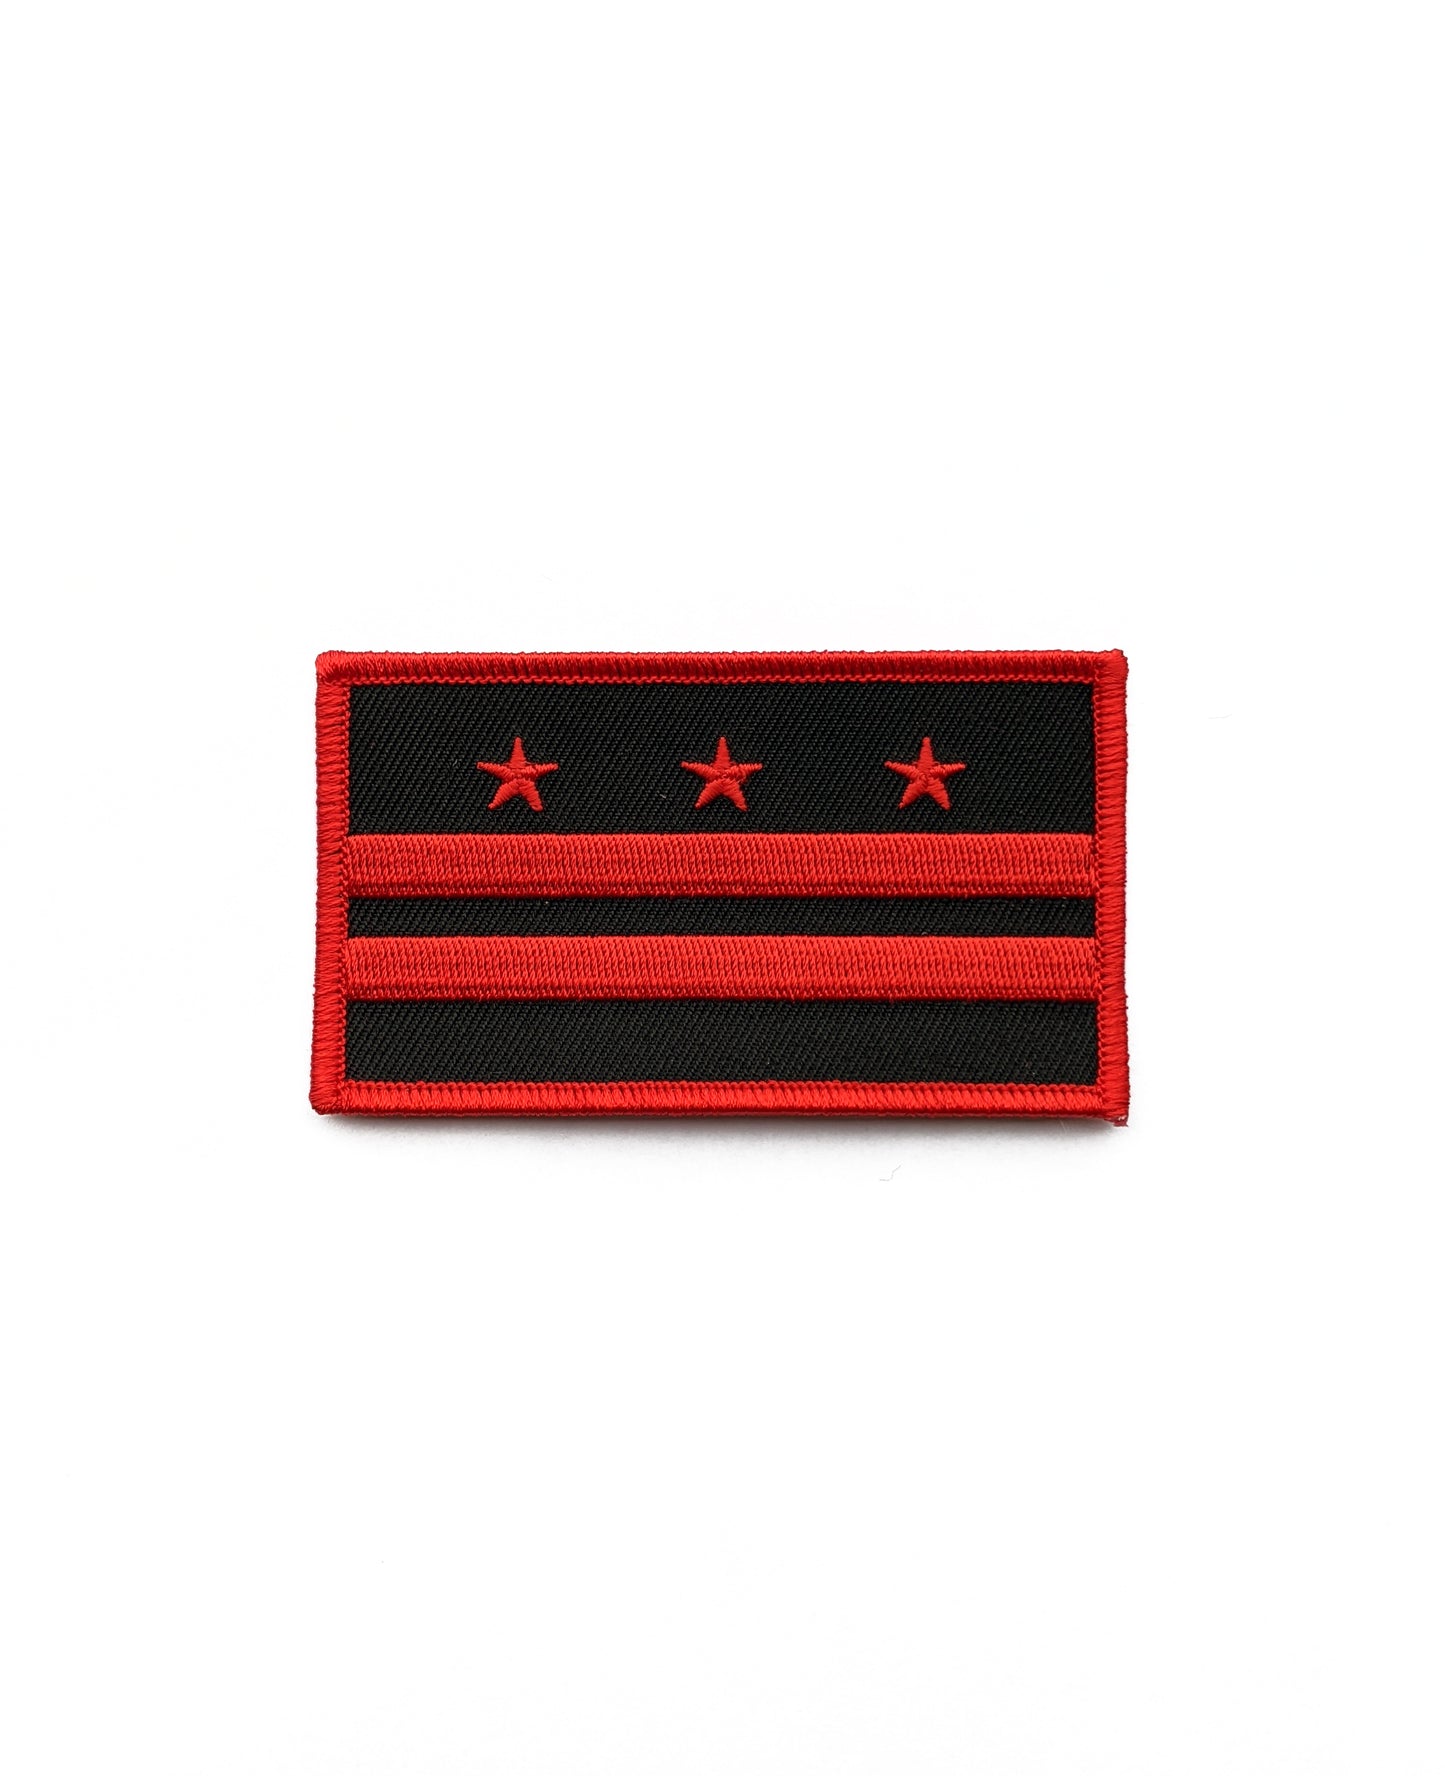 Washington DC Flag Patch Black & Red Version